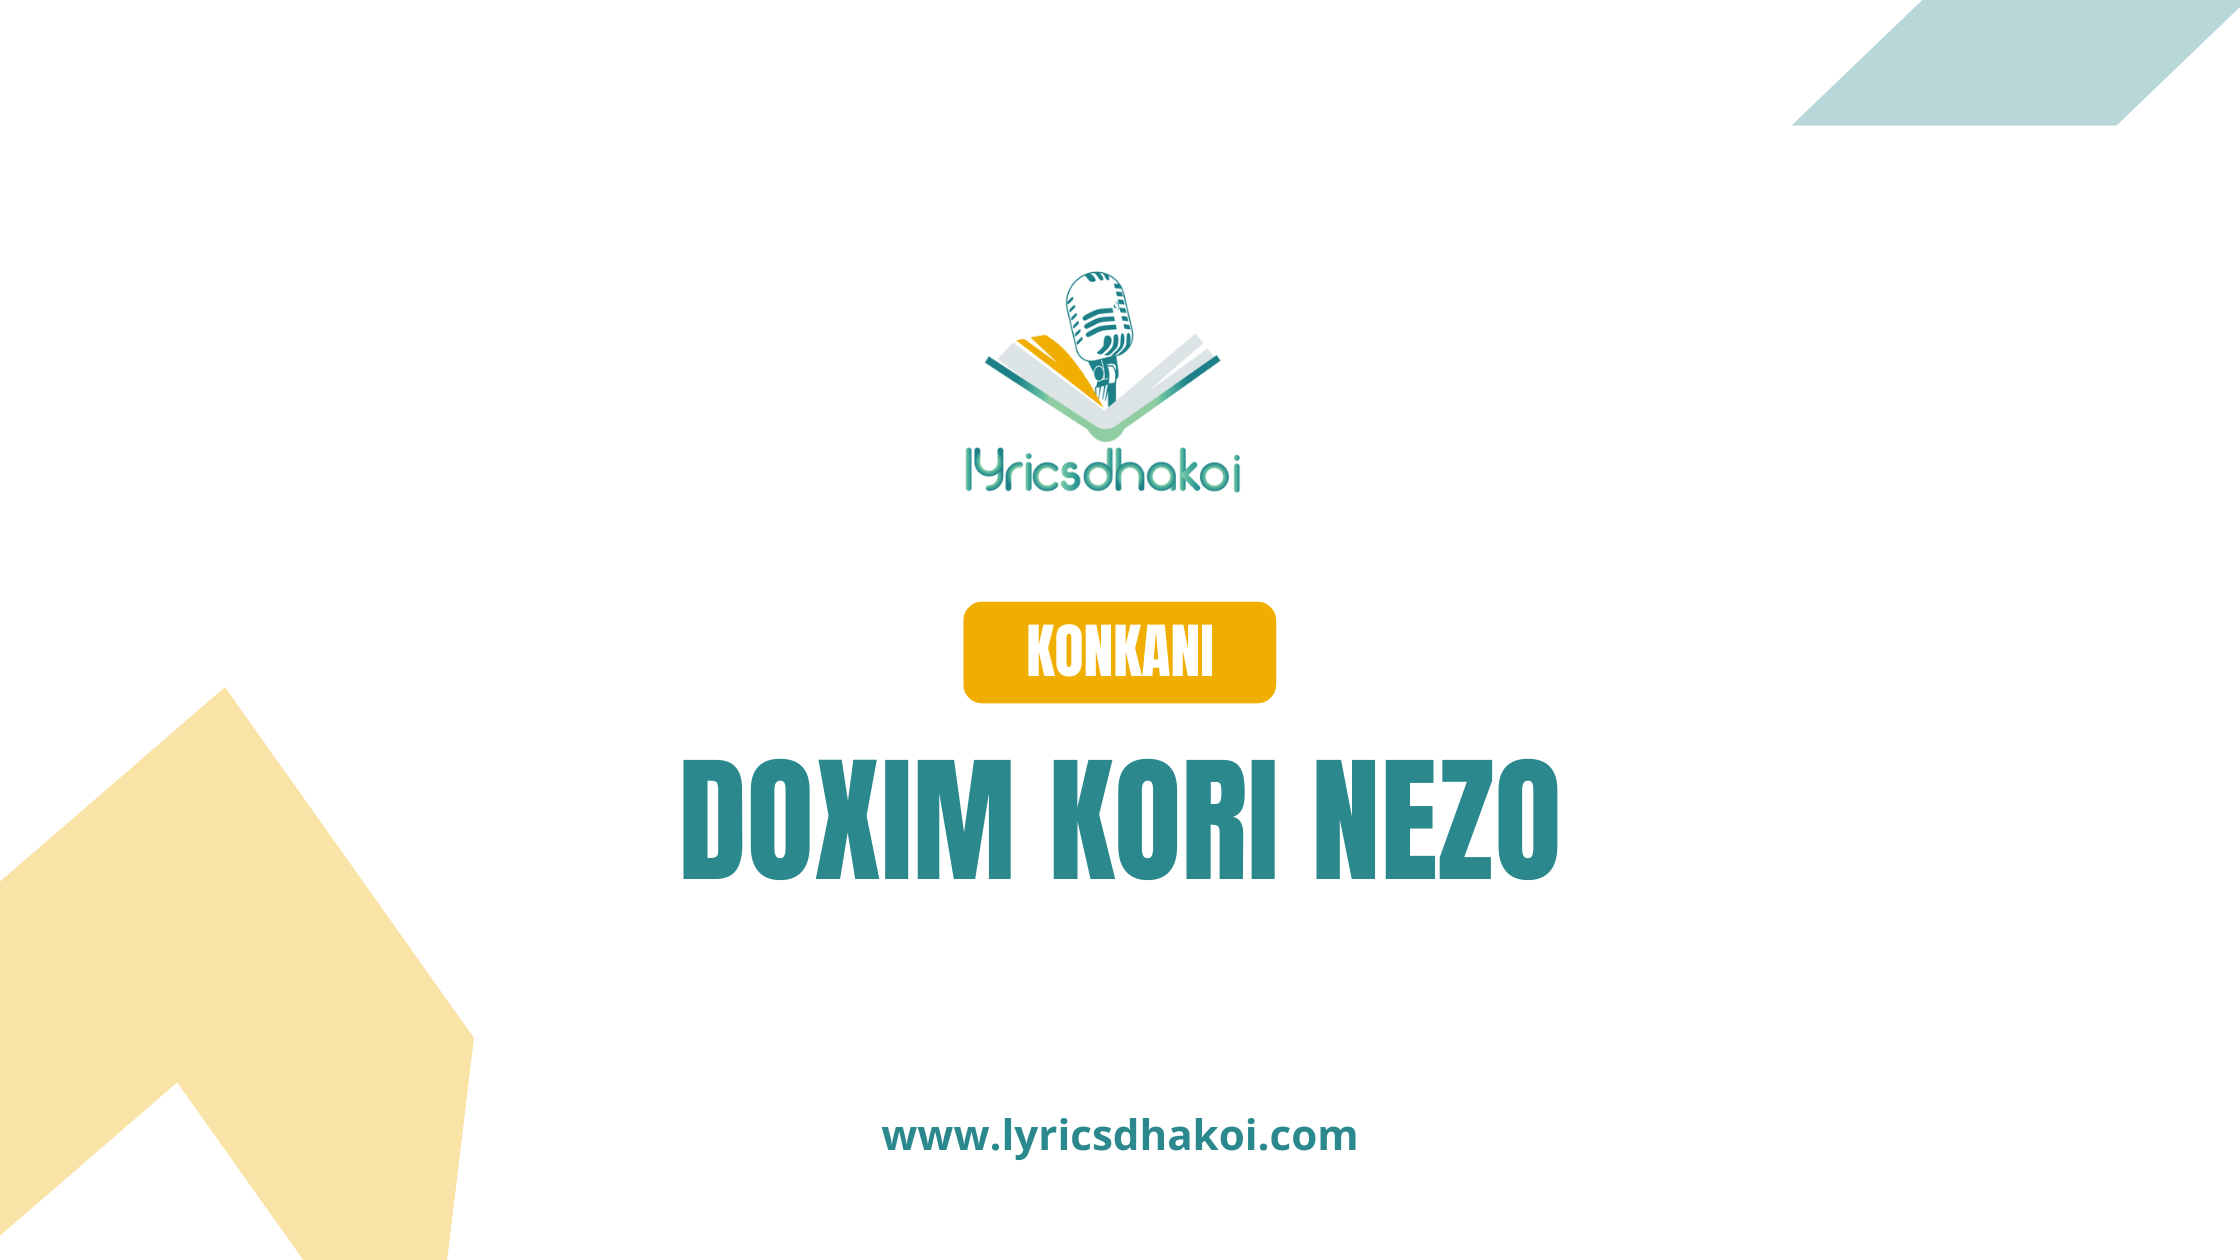 Doxim Kori Nezo Konkani Lyrics for Karaoke Online - LyricsDhakoi.com